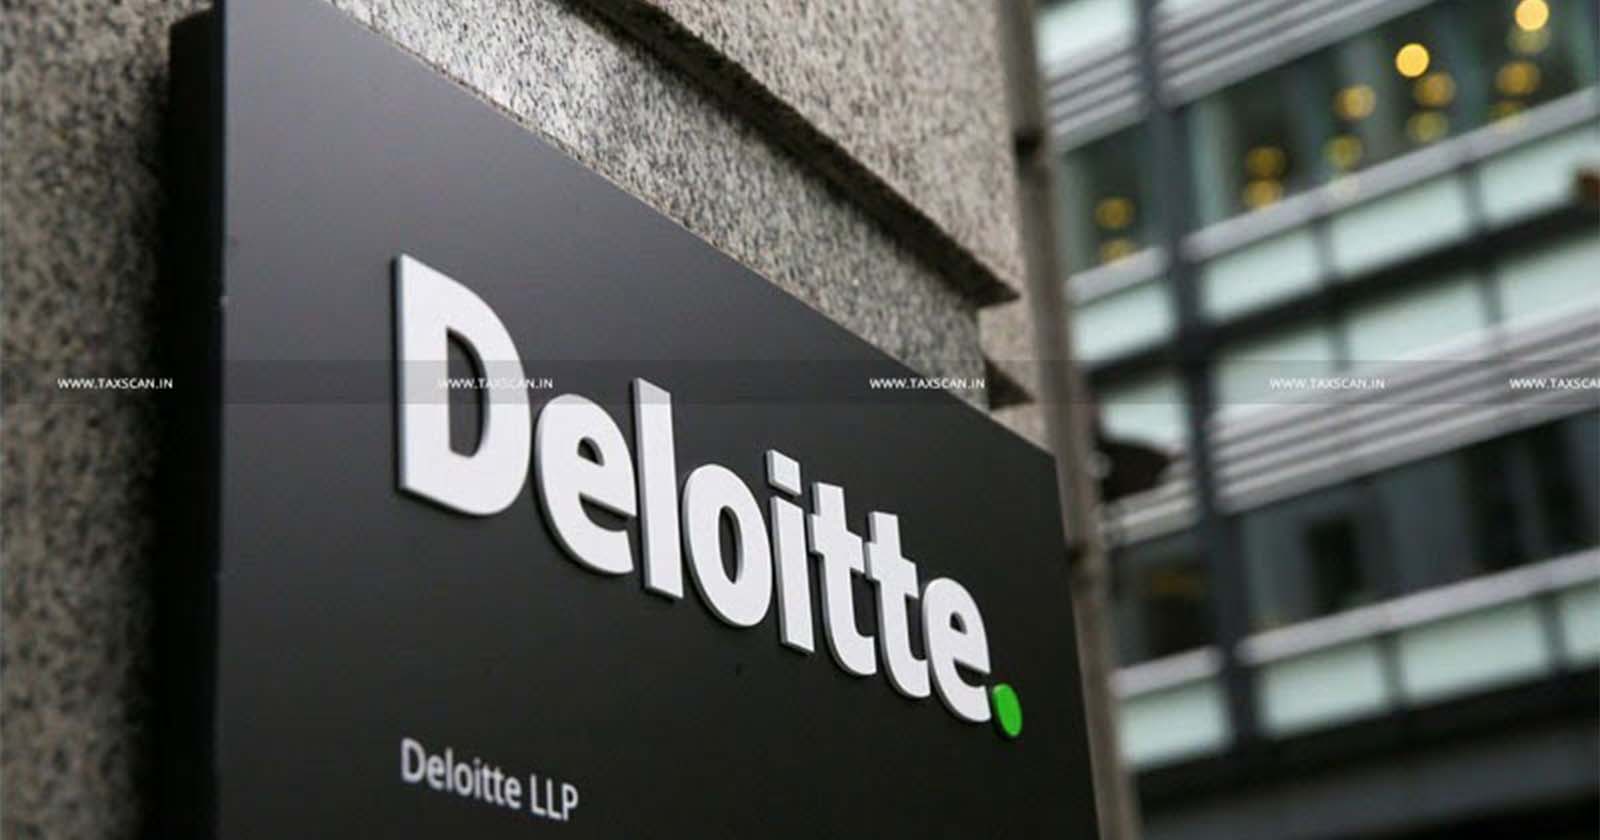 Deloitte - CA vacancy - MBA vacancy - job scan - job news - taxscan